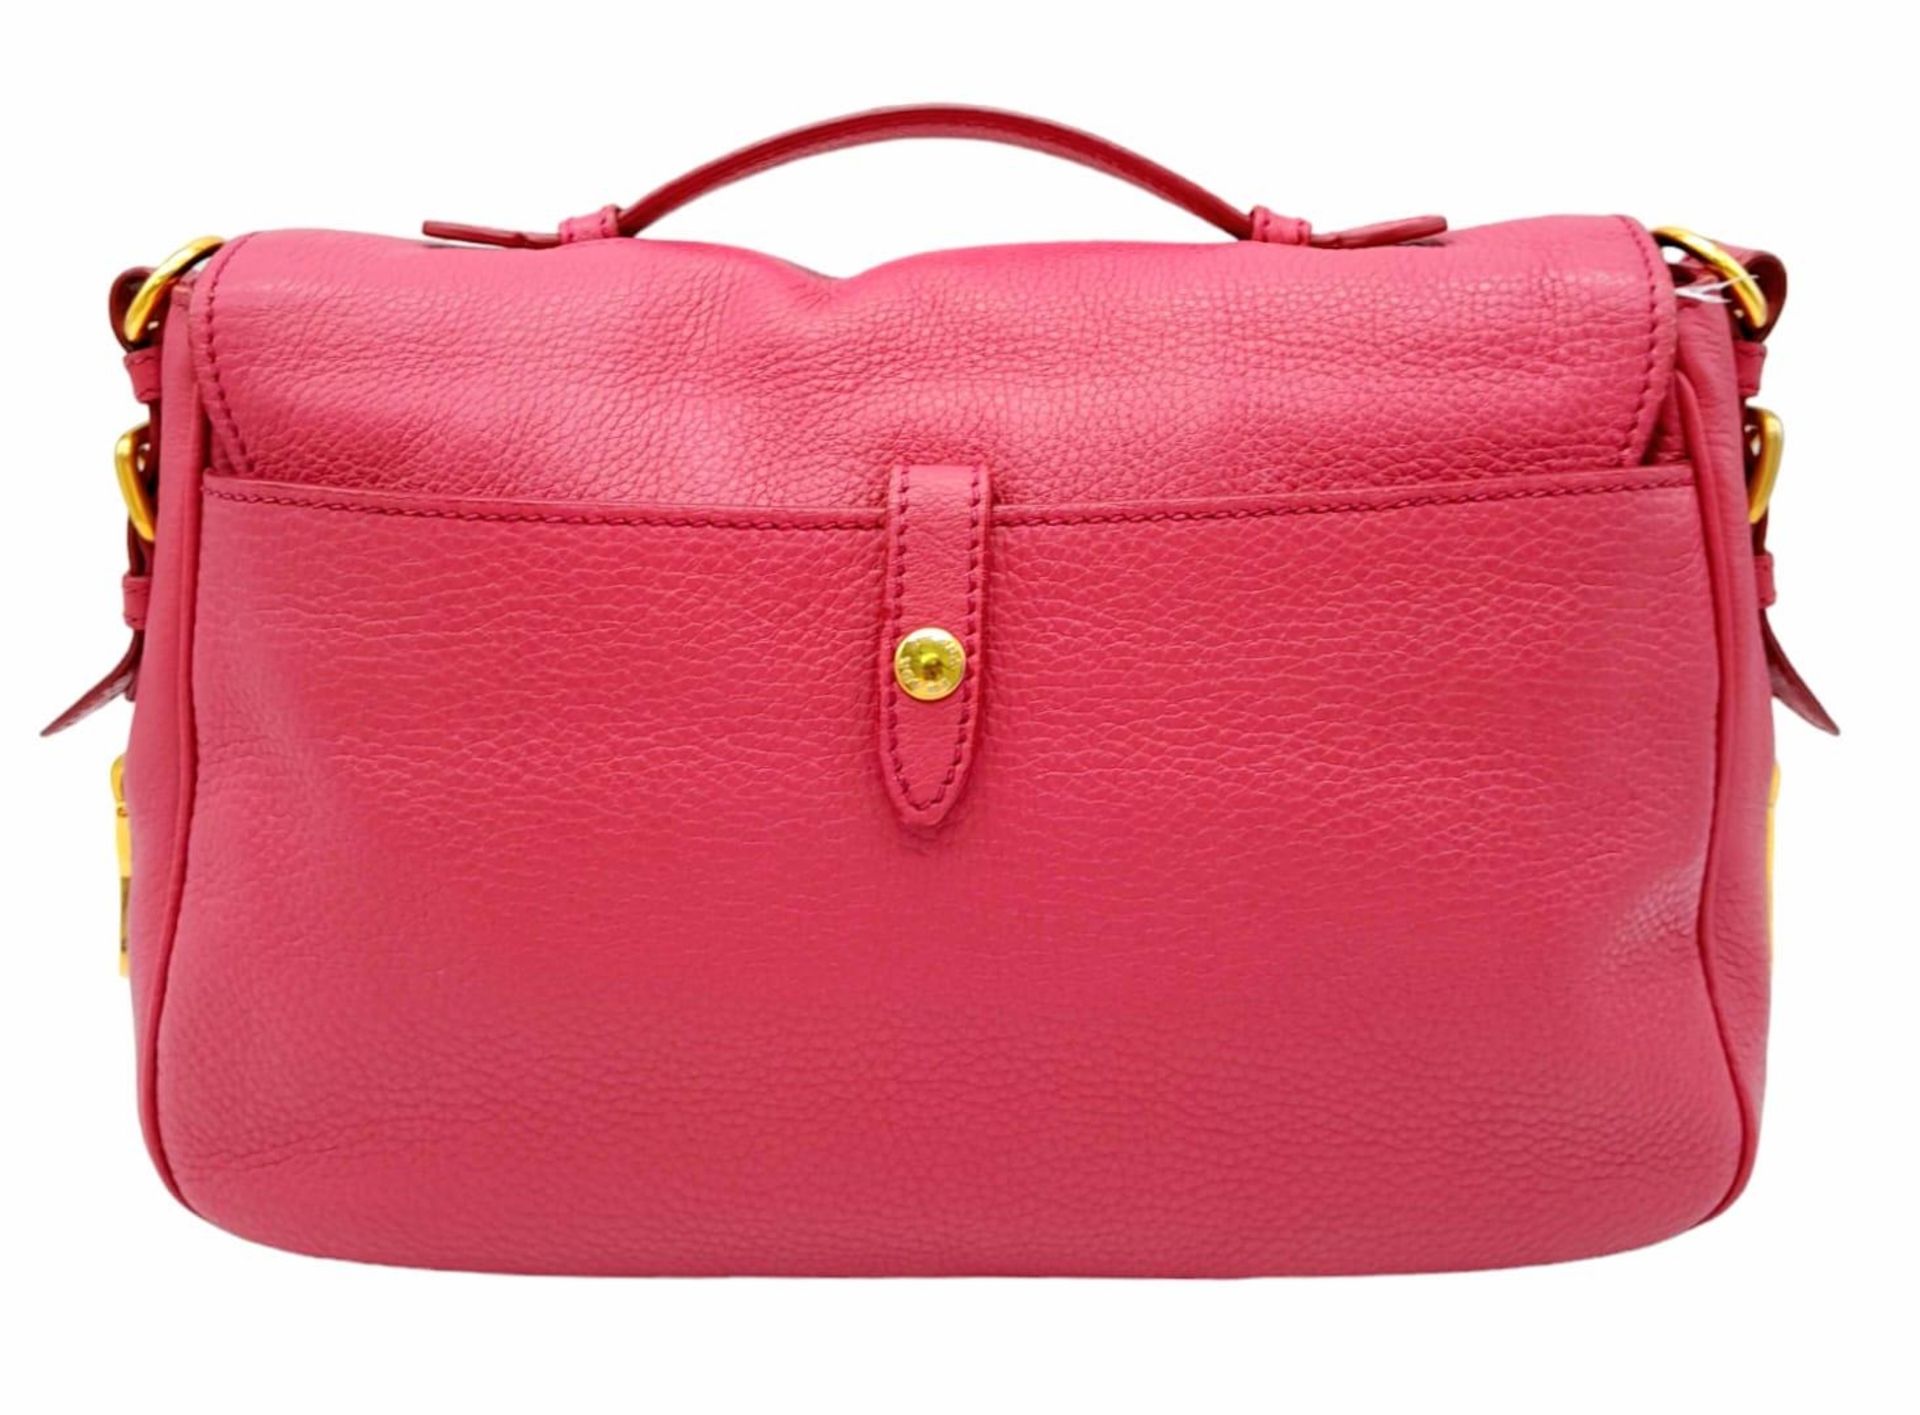 A Prada Vitello Daino satchel bag, soft pink leather, matching leather/fabric interior, gold tone - Image 3 of 11